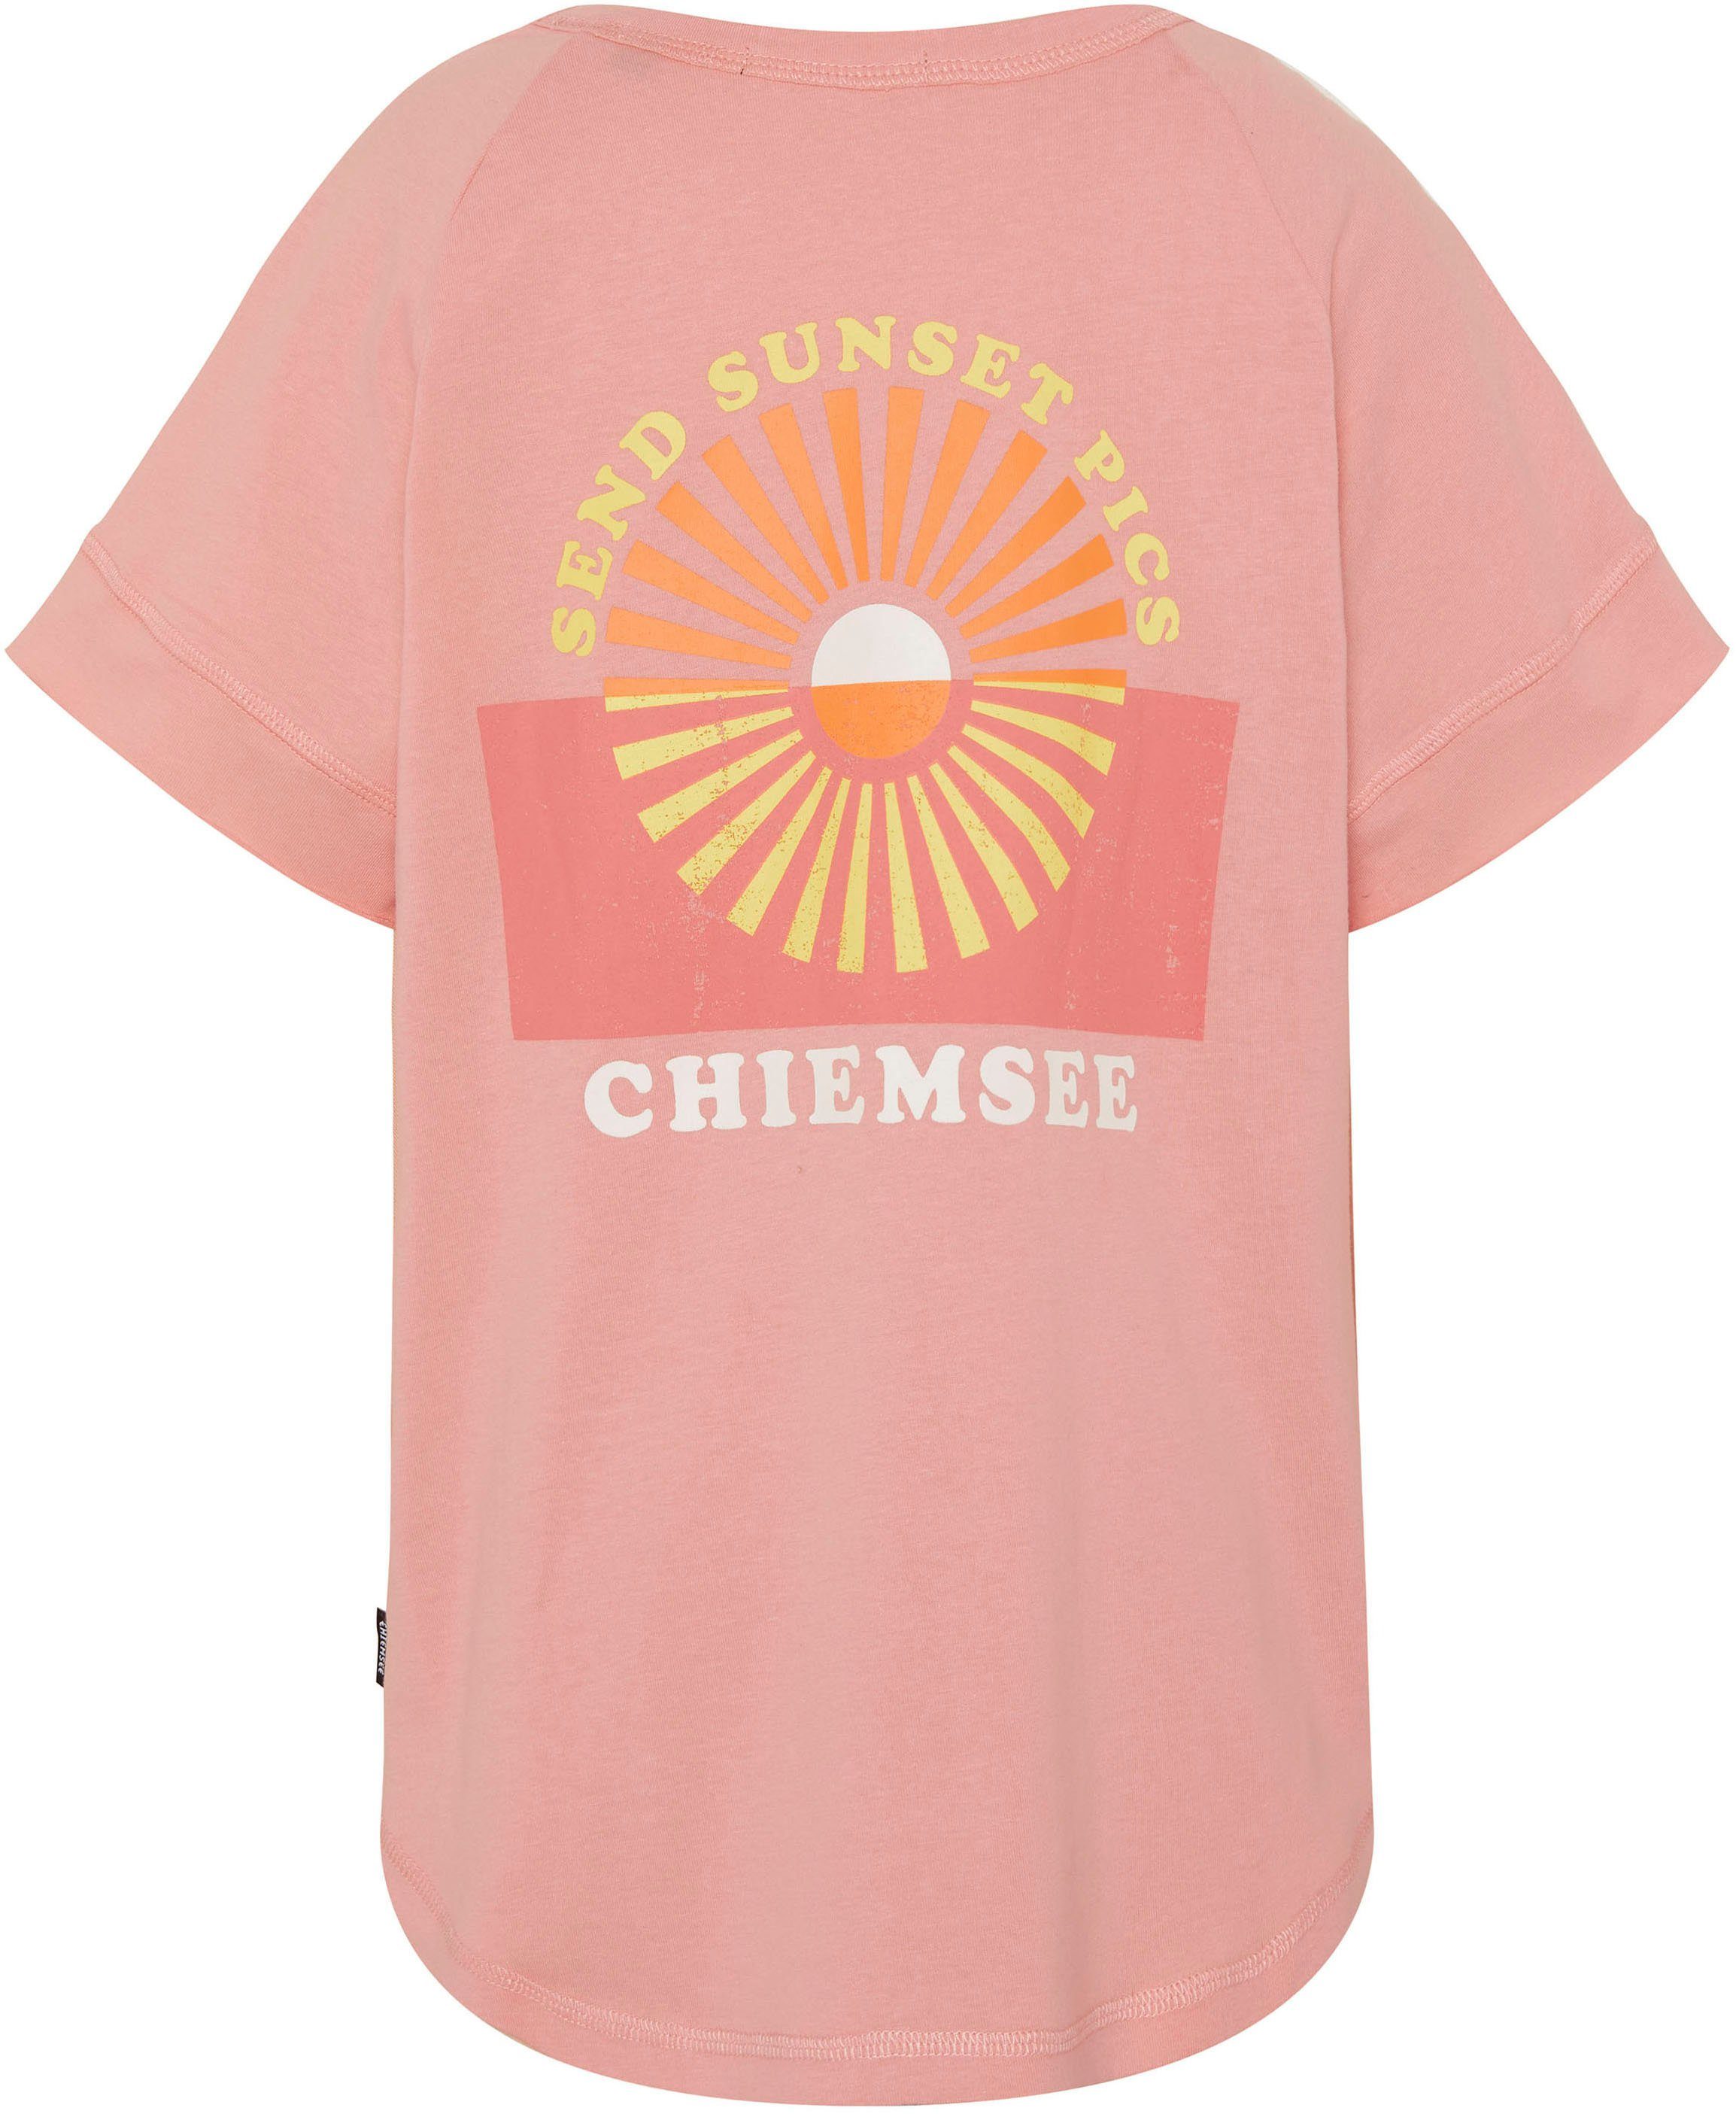 Chiemsee T-Shirt peachn'cream